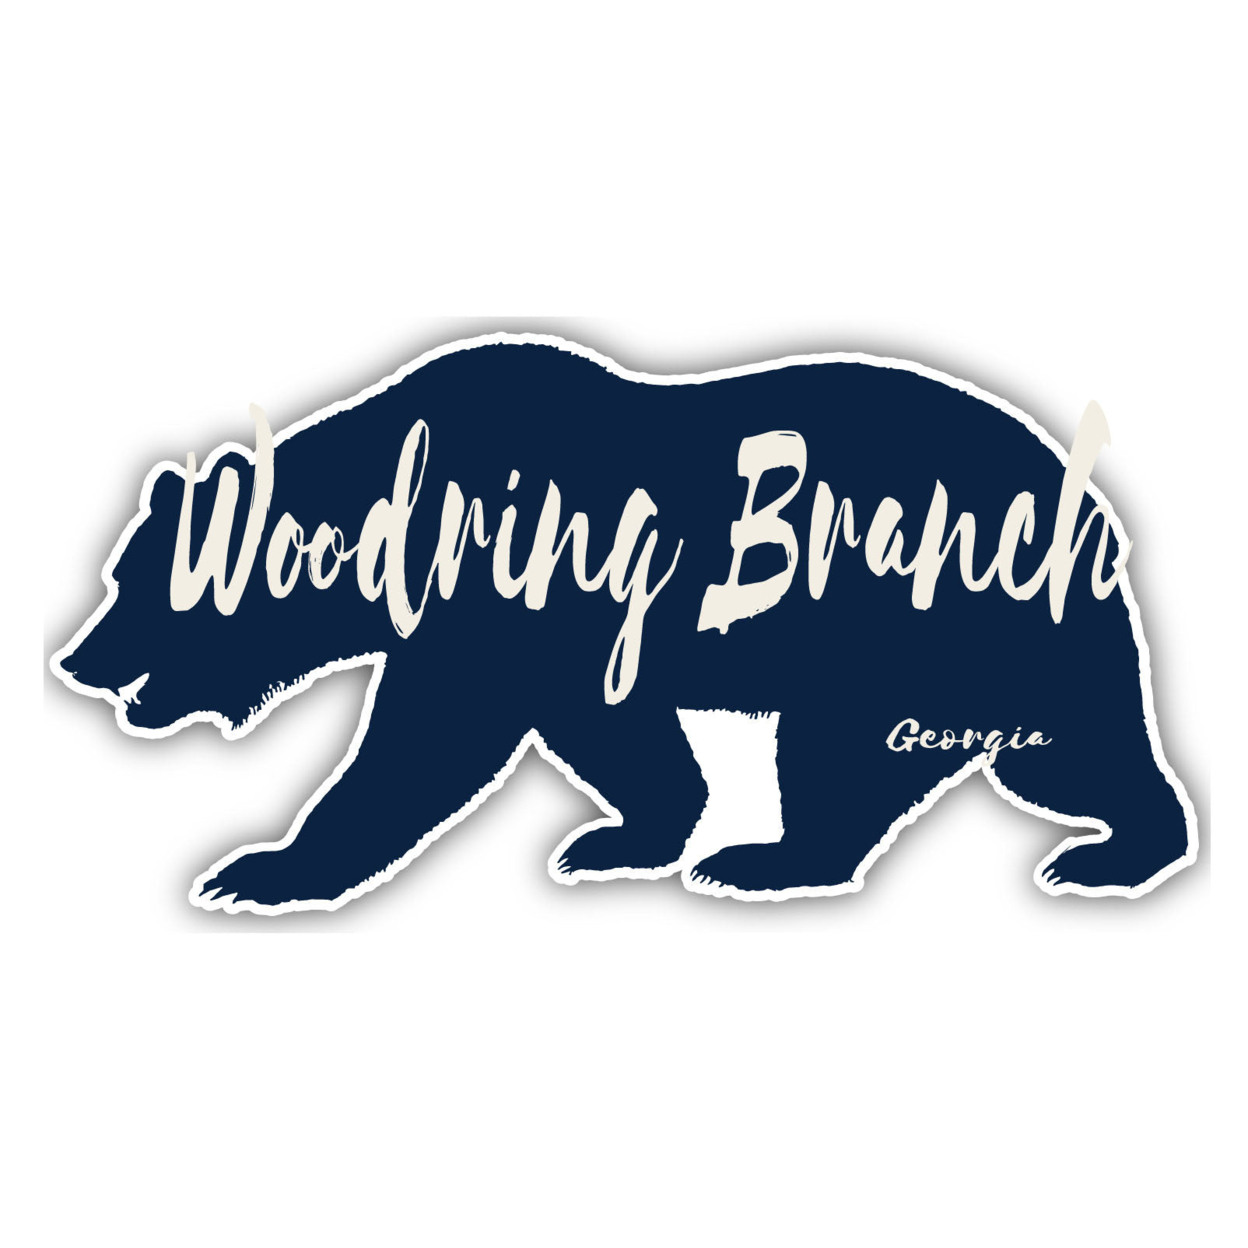 Woodring Branch Georgia Souvenir Decorative Stickers (Choose Theme And Size) - Single Unit, 2-Inch, Bear